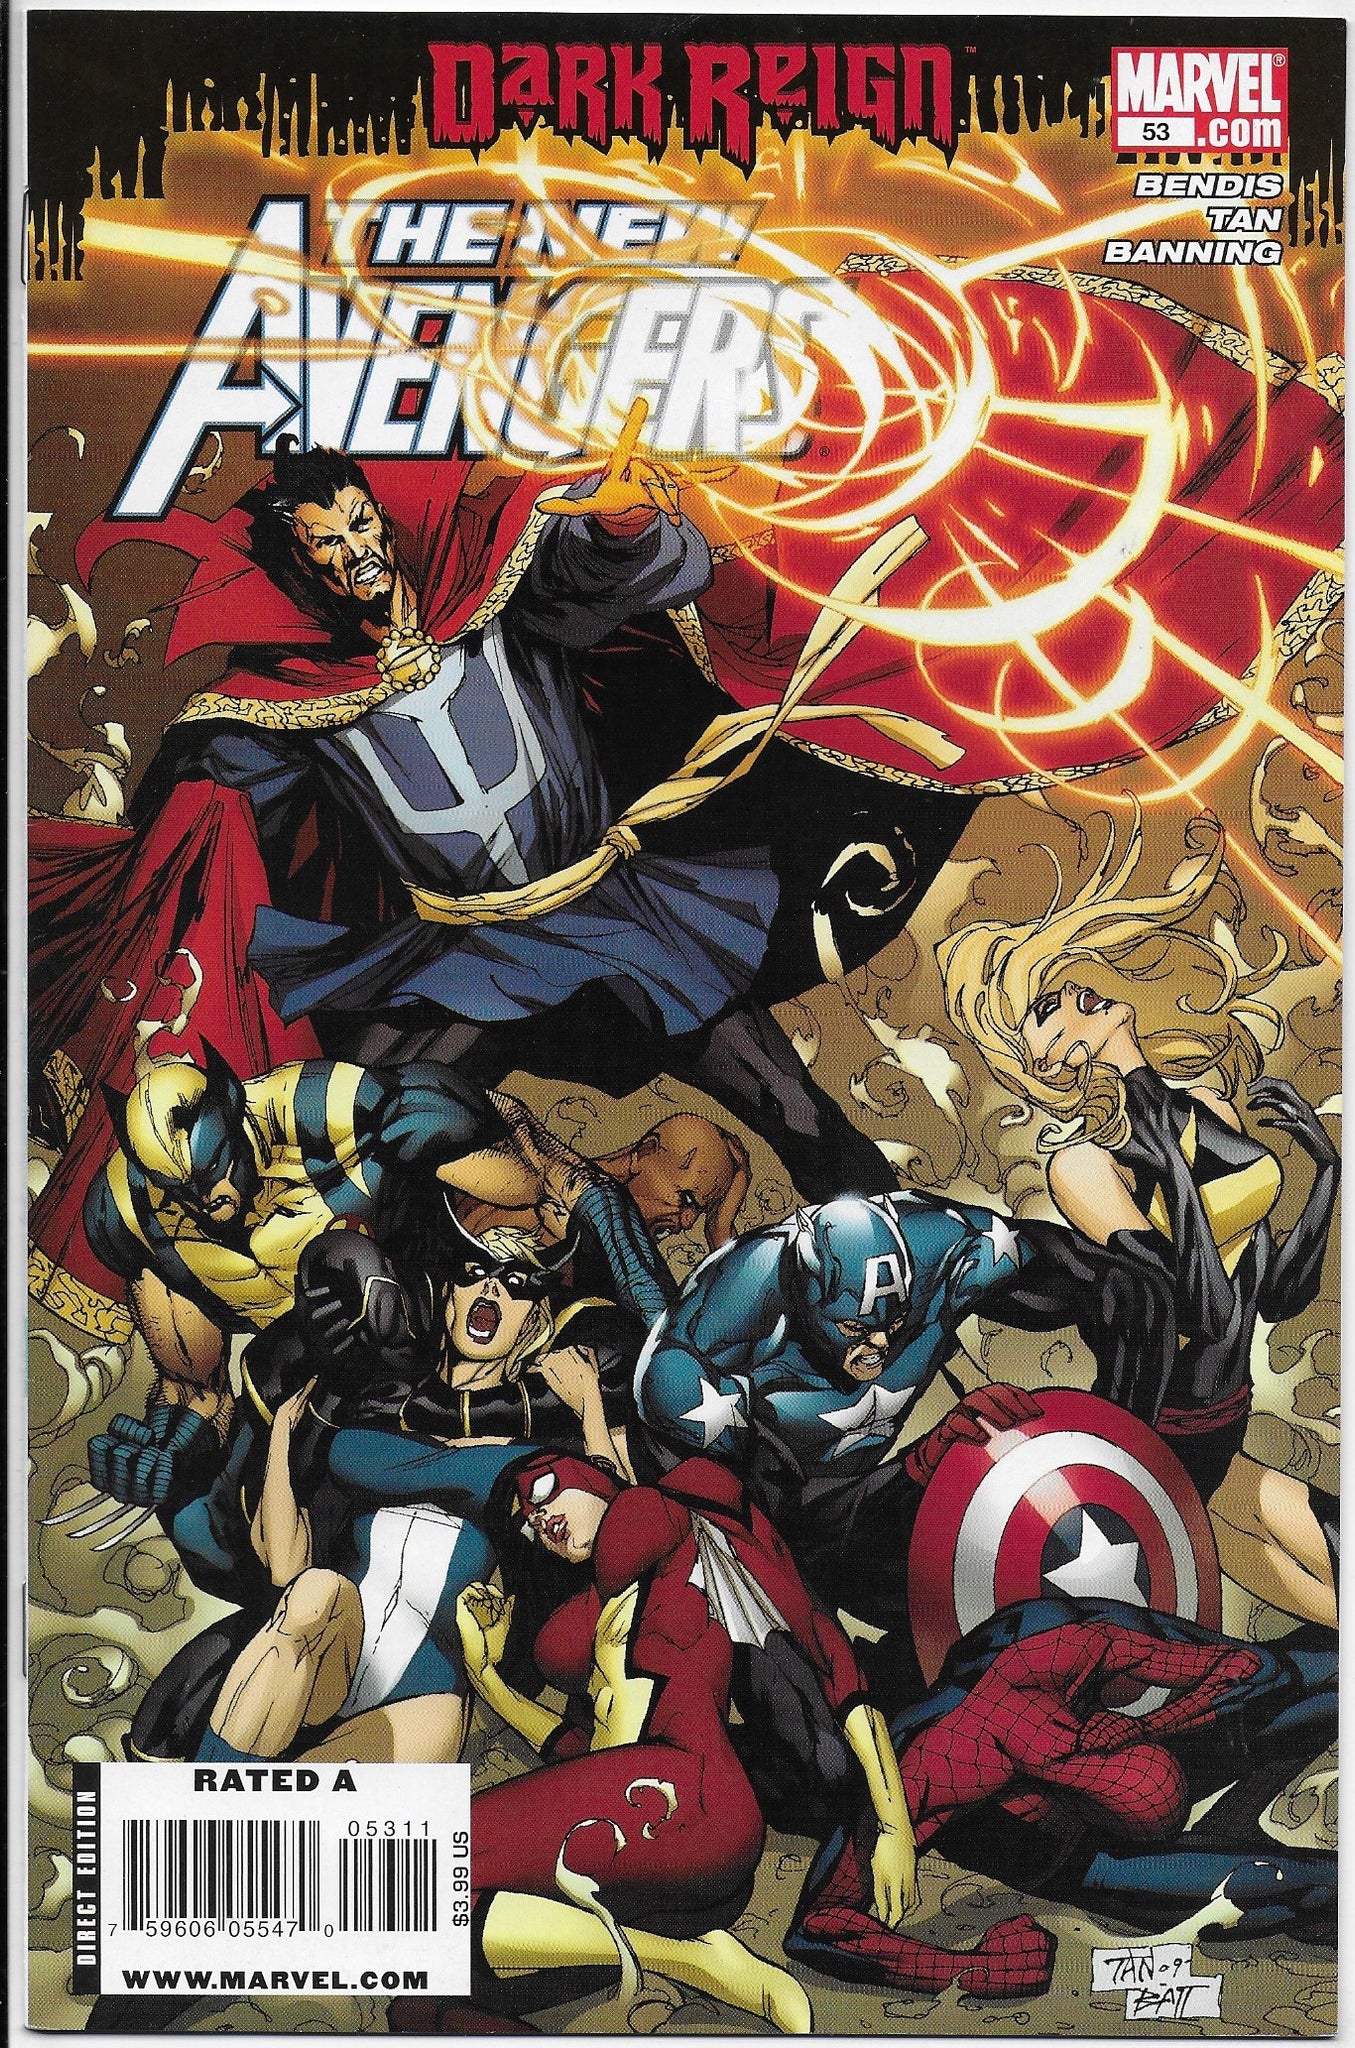 The New Avengers 53